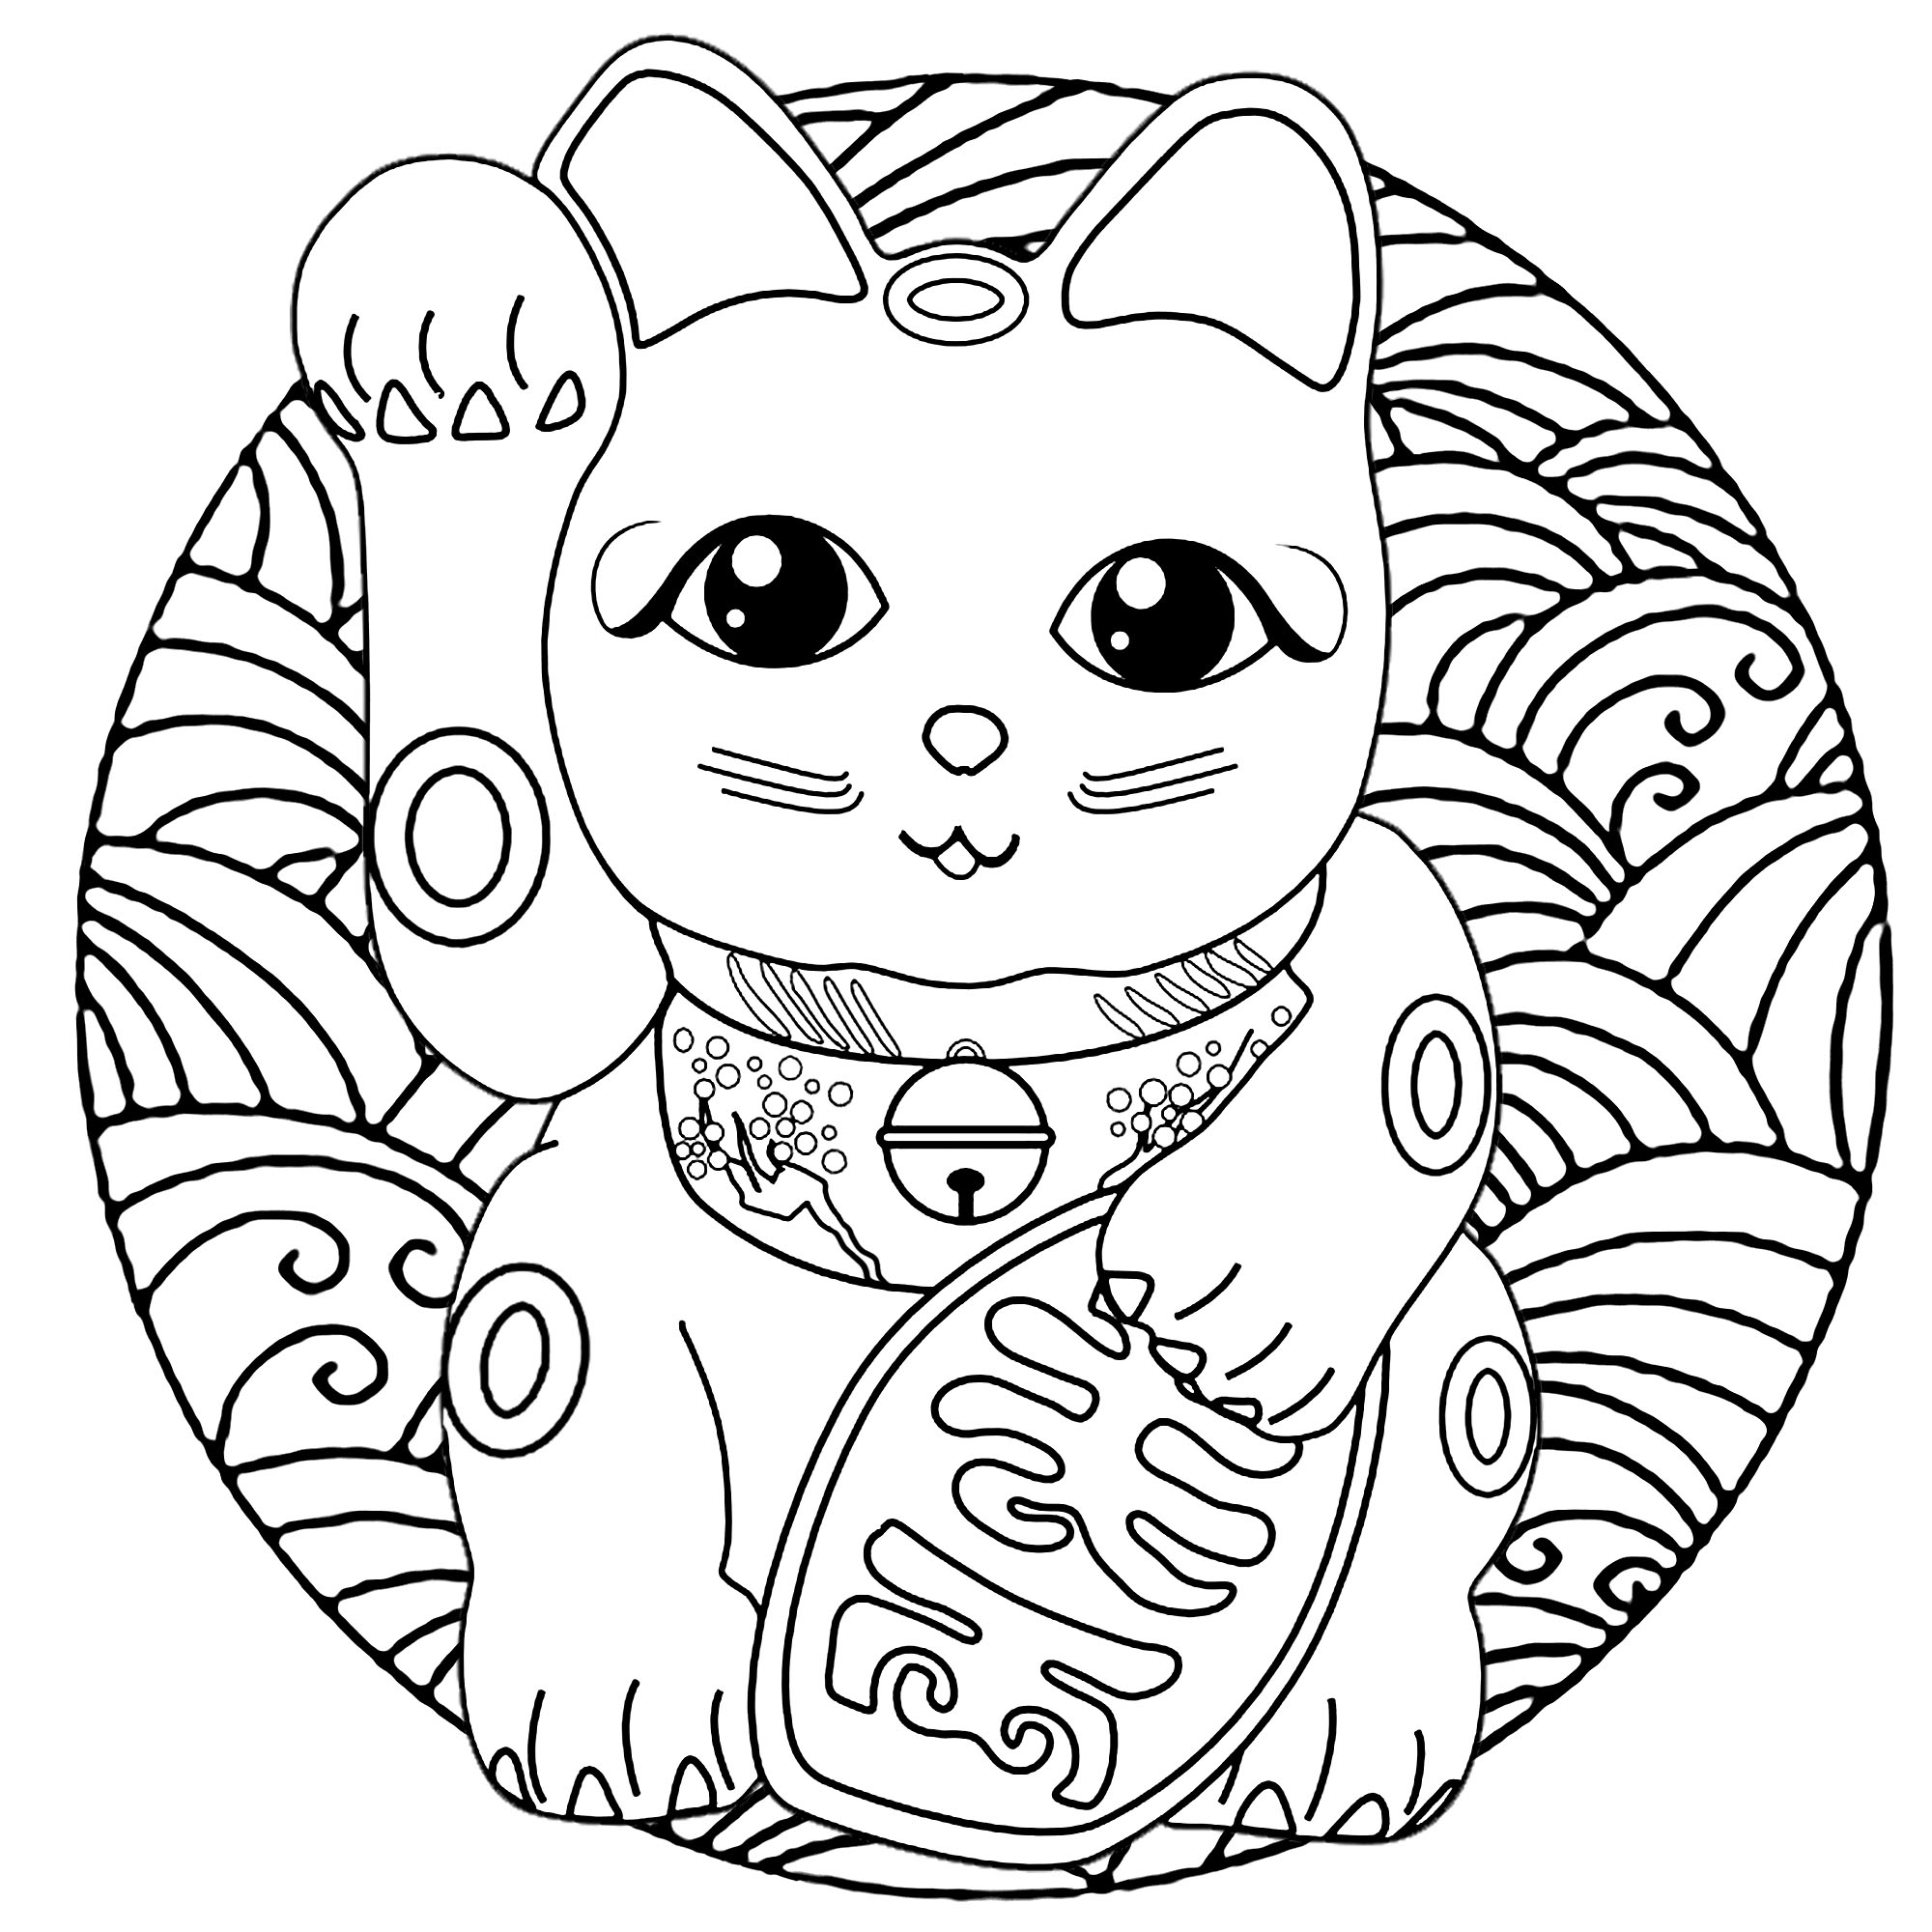 Um bonito gato Maneki Neko (estatueta japonesa: amuleto da sorte, talismã) numa Mandala cheia de ondas (estilo de design gráfico japonês), Artista : Art'Isabelle